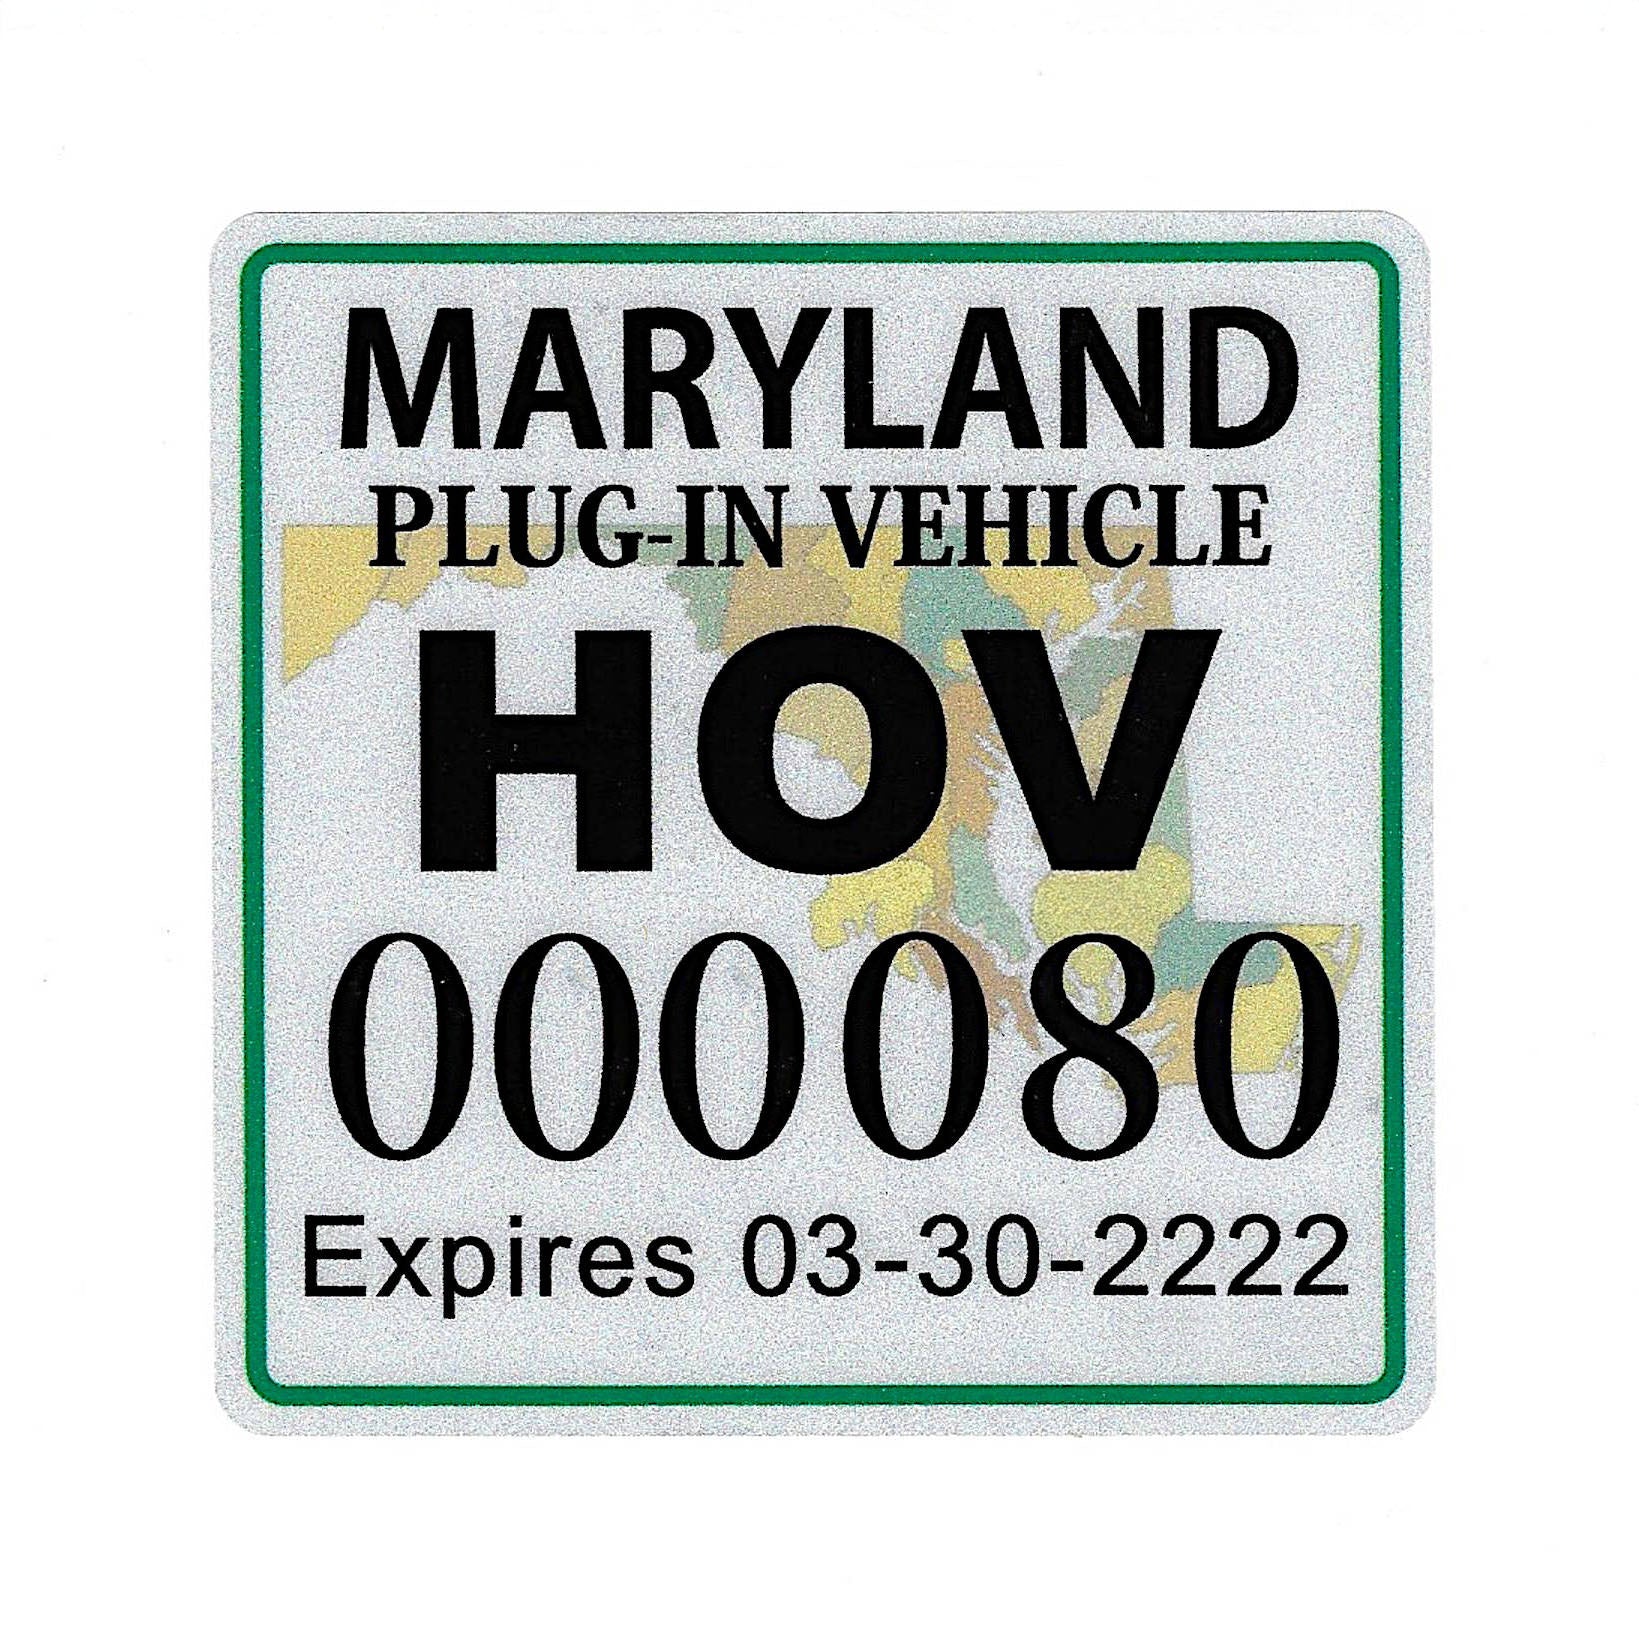 Maryland HOV Stickers Protection Film EV Wraps